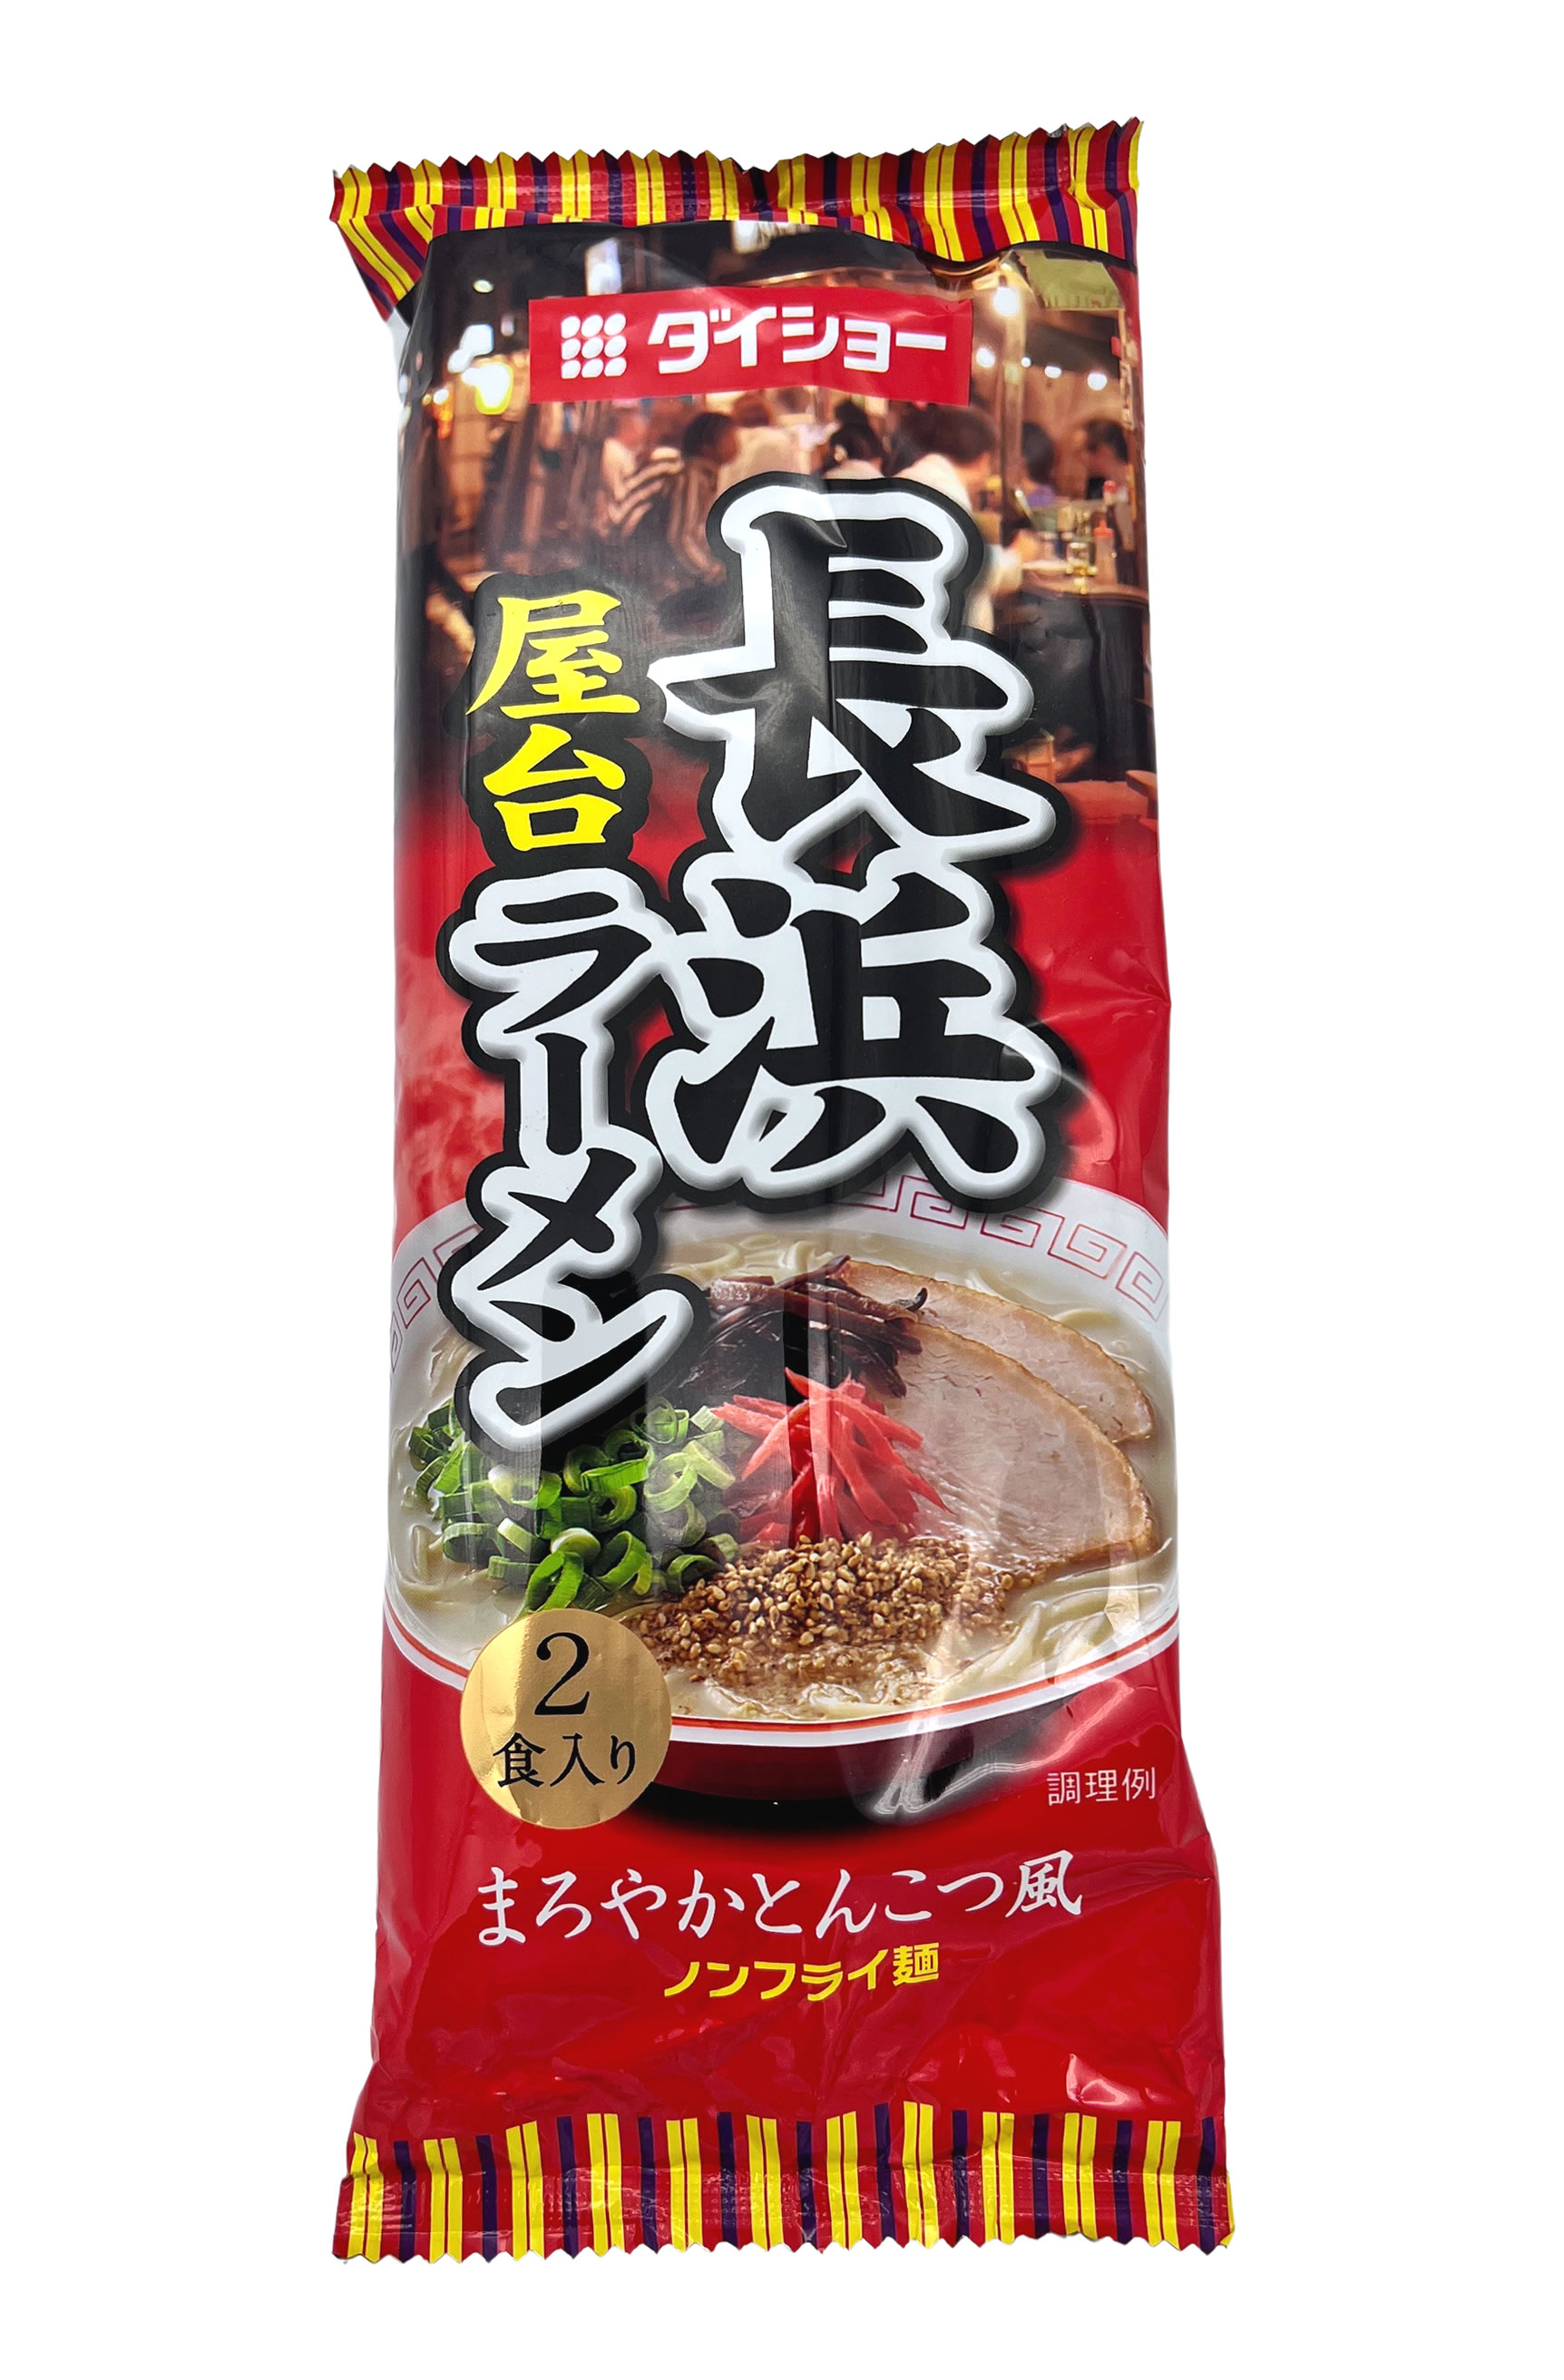 Ramen Nudeln mit Suppe Nagahama, 188 g